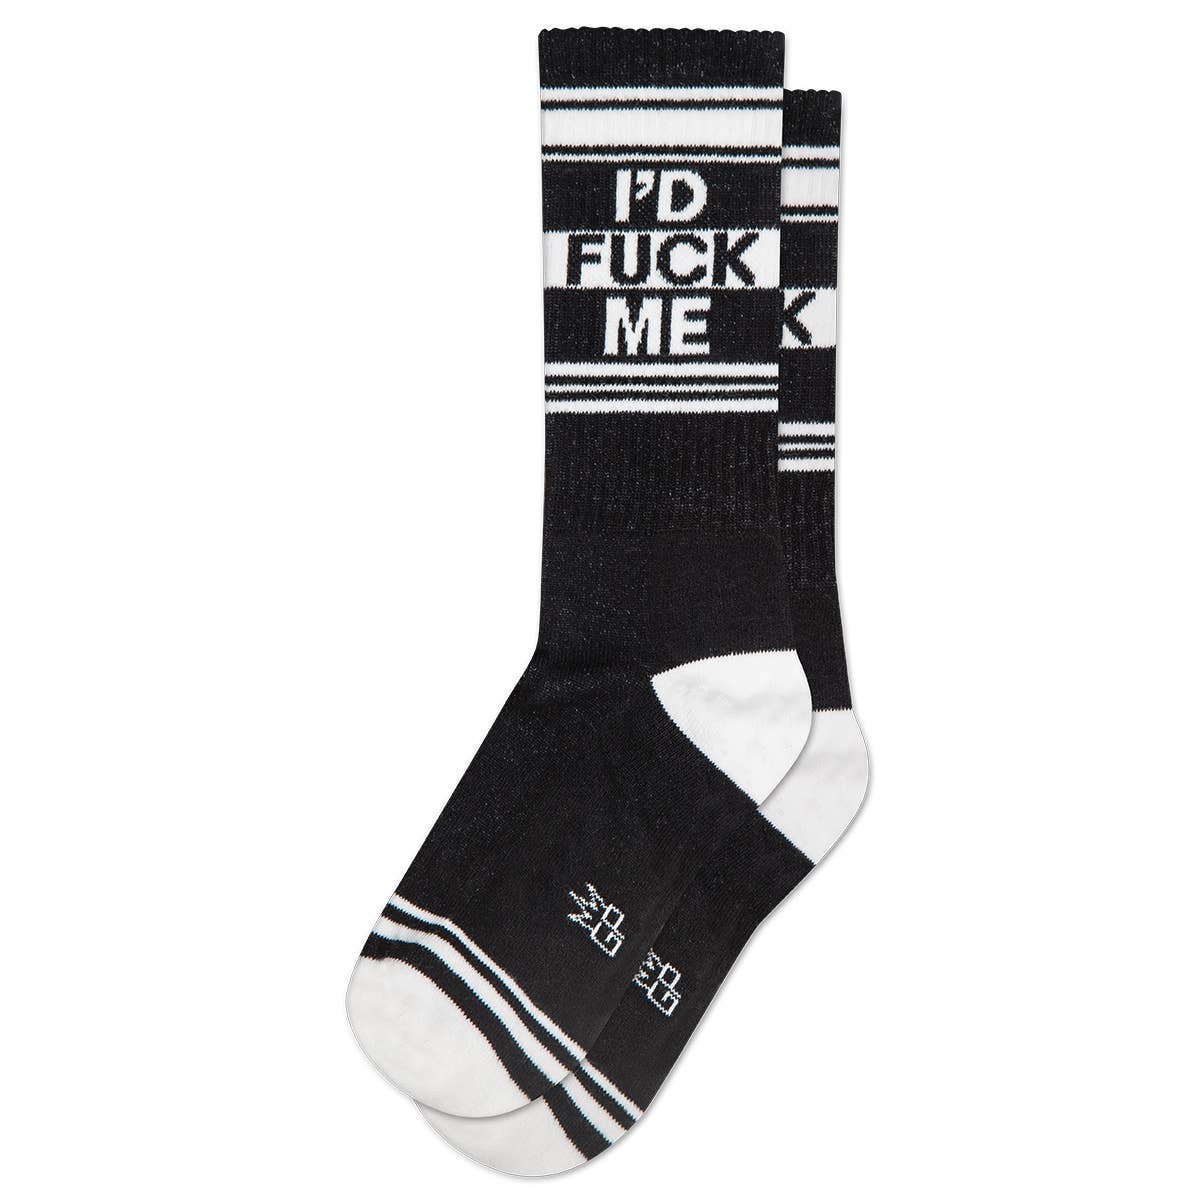 Socks - I'd Fuck Me